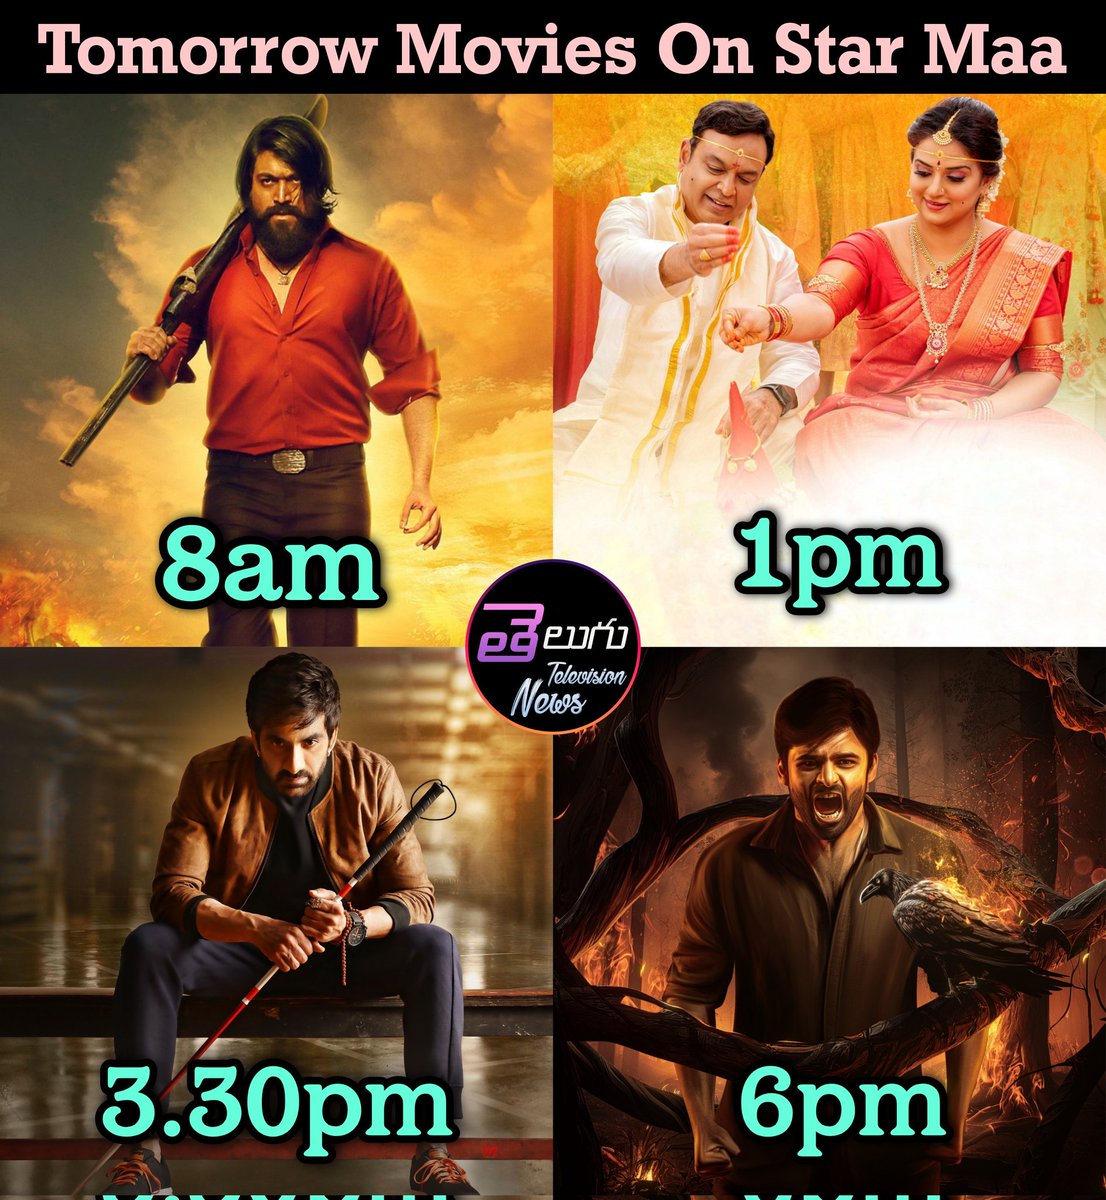 Tomorrow Movies On #StarMaa 

8am:- #KGF
1pm:- #MalliPelli
3.30pm:- #RajaTheGreat
6pm:- #Virupaksha

#YashBOSS #Yash #SrinidhiShetty #Naresh #PavitraLokesh #RaviTeja #Mehreen #SaiDharamTej #SamyukthaMenon